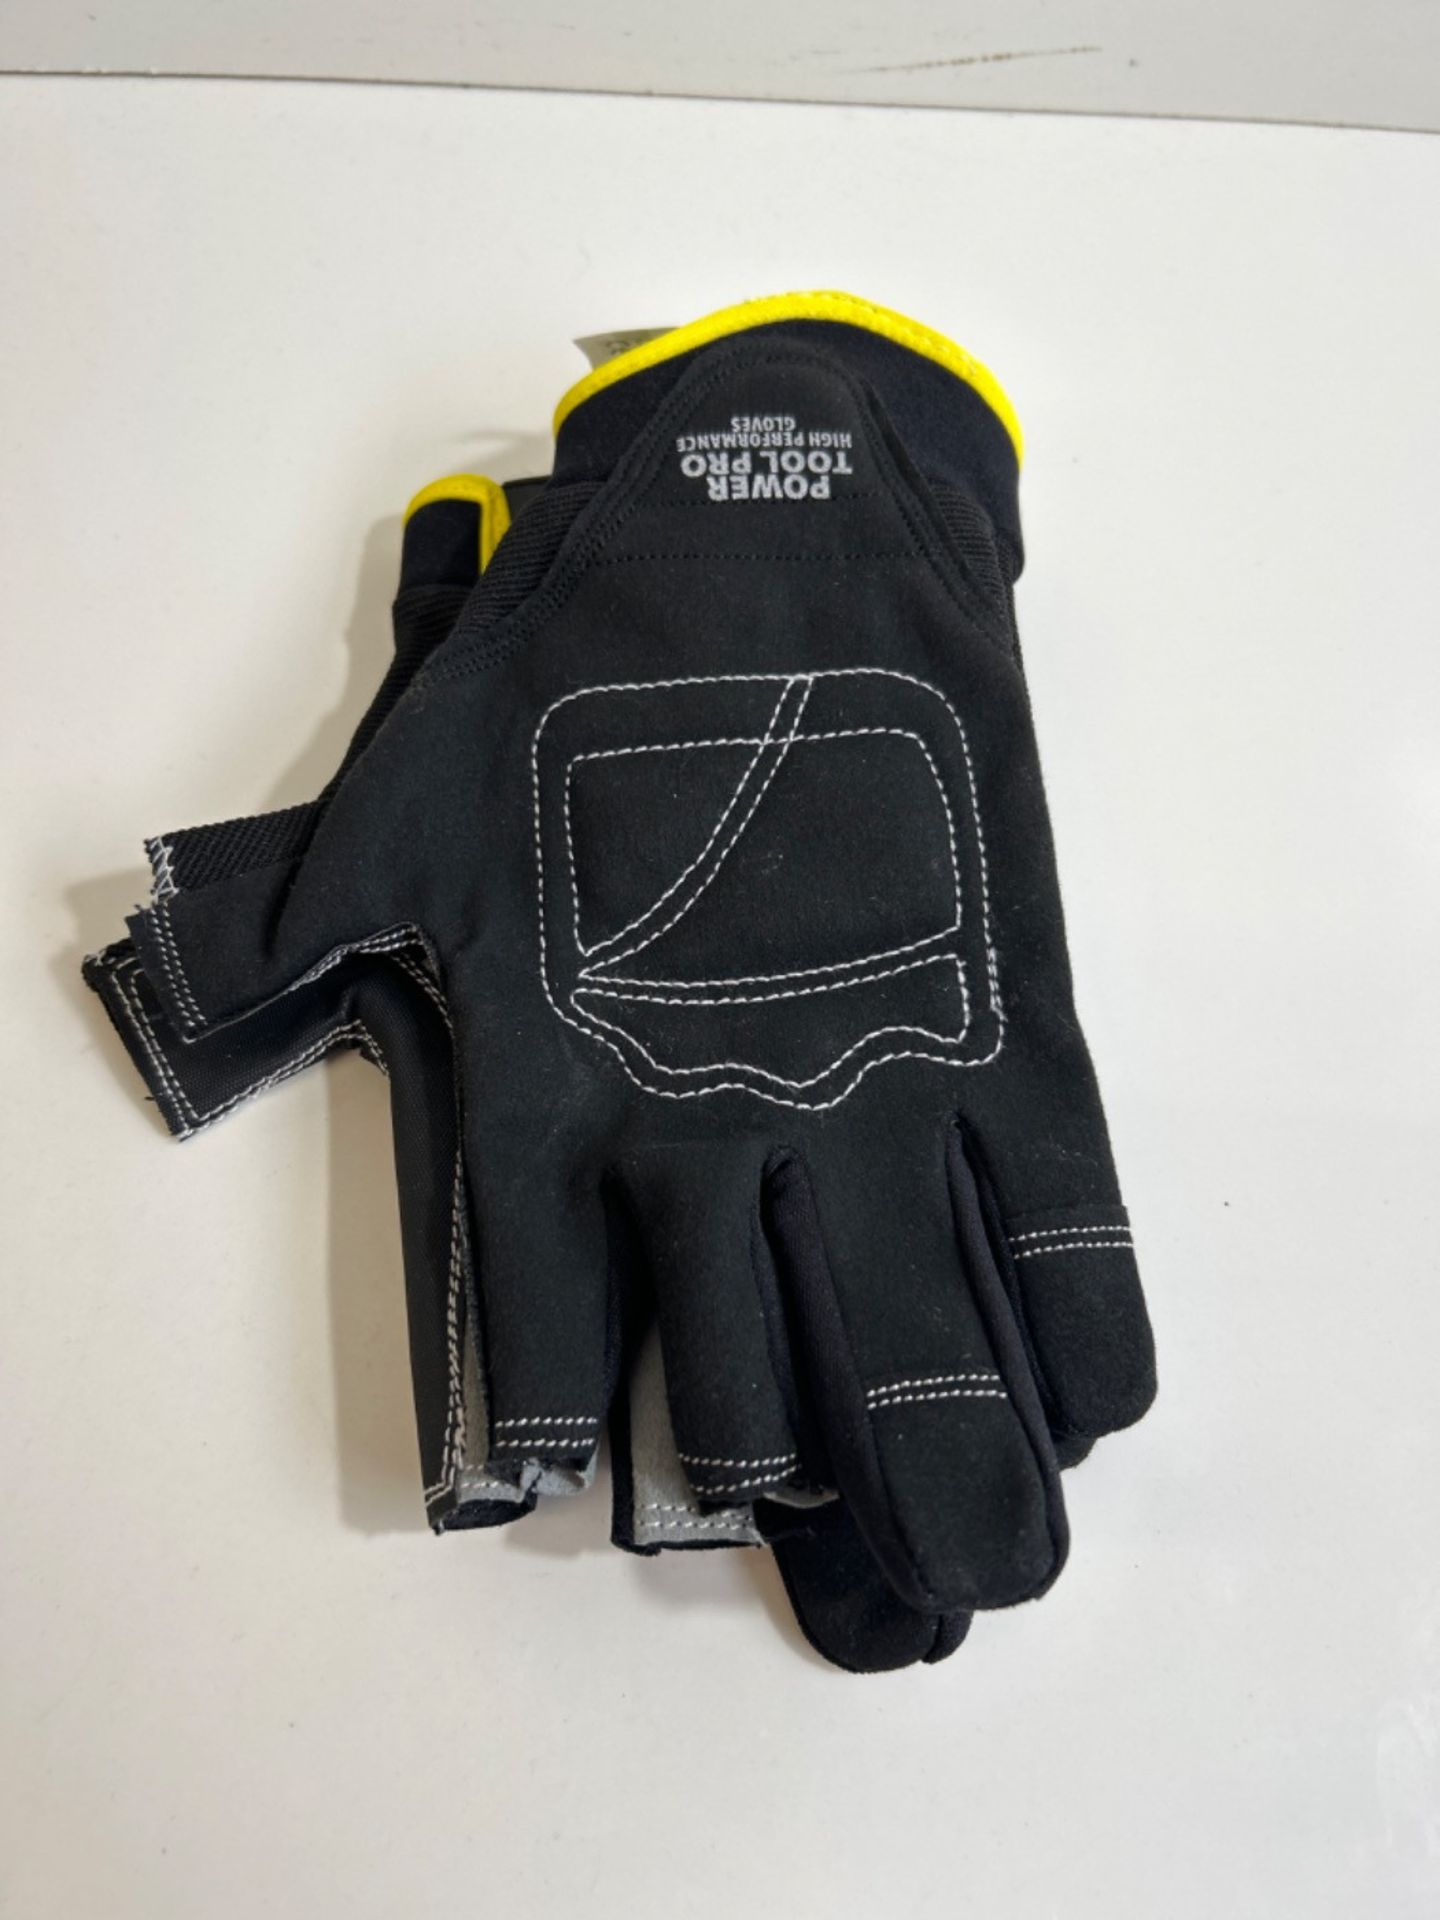 Portwest A740 Powertool Pro - High Performance Glove Black, Medium - Image 3 of 3